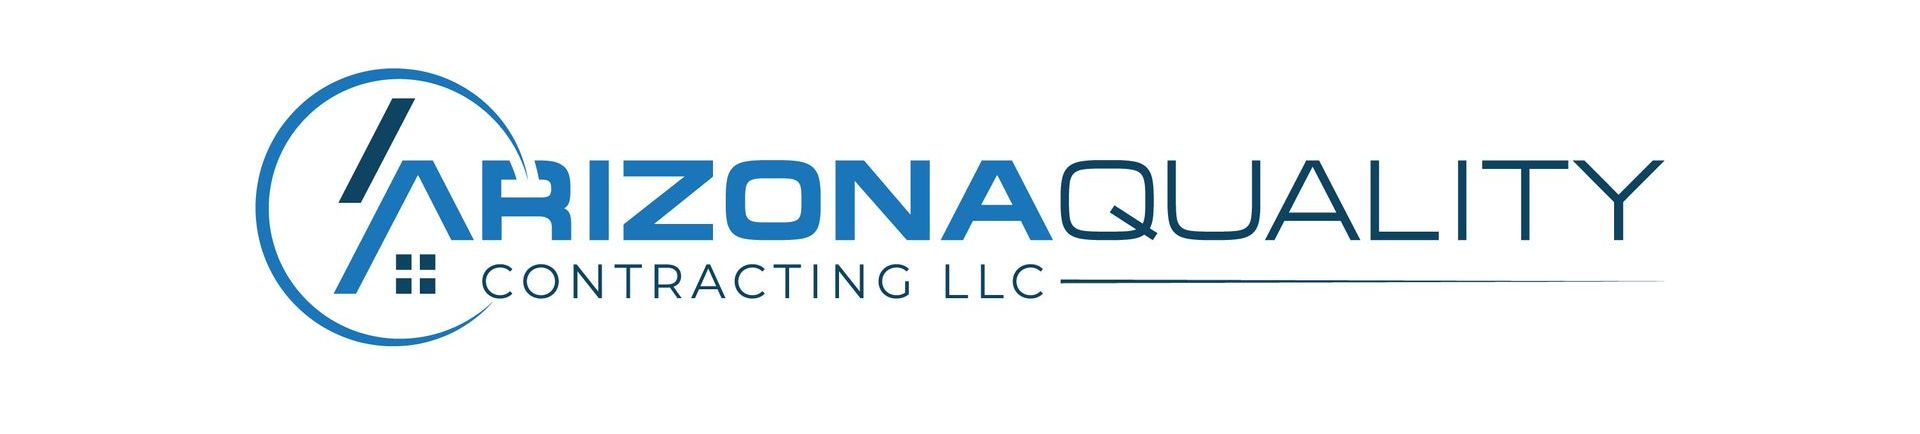 Arizona Quality Contracting, LLC Logo